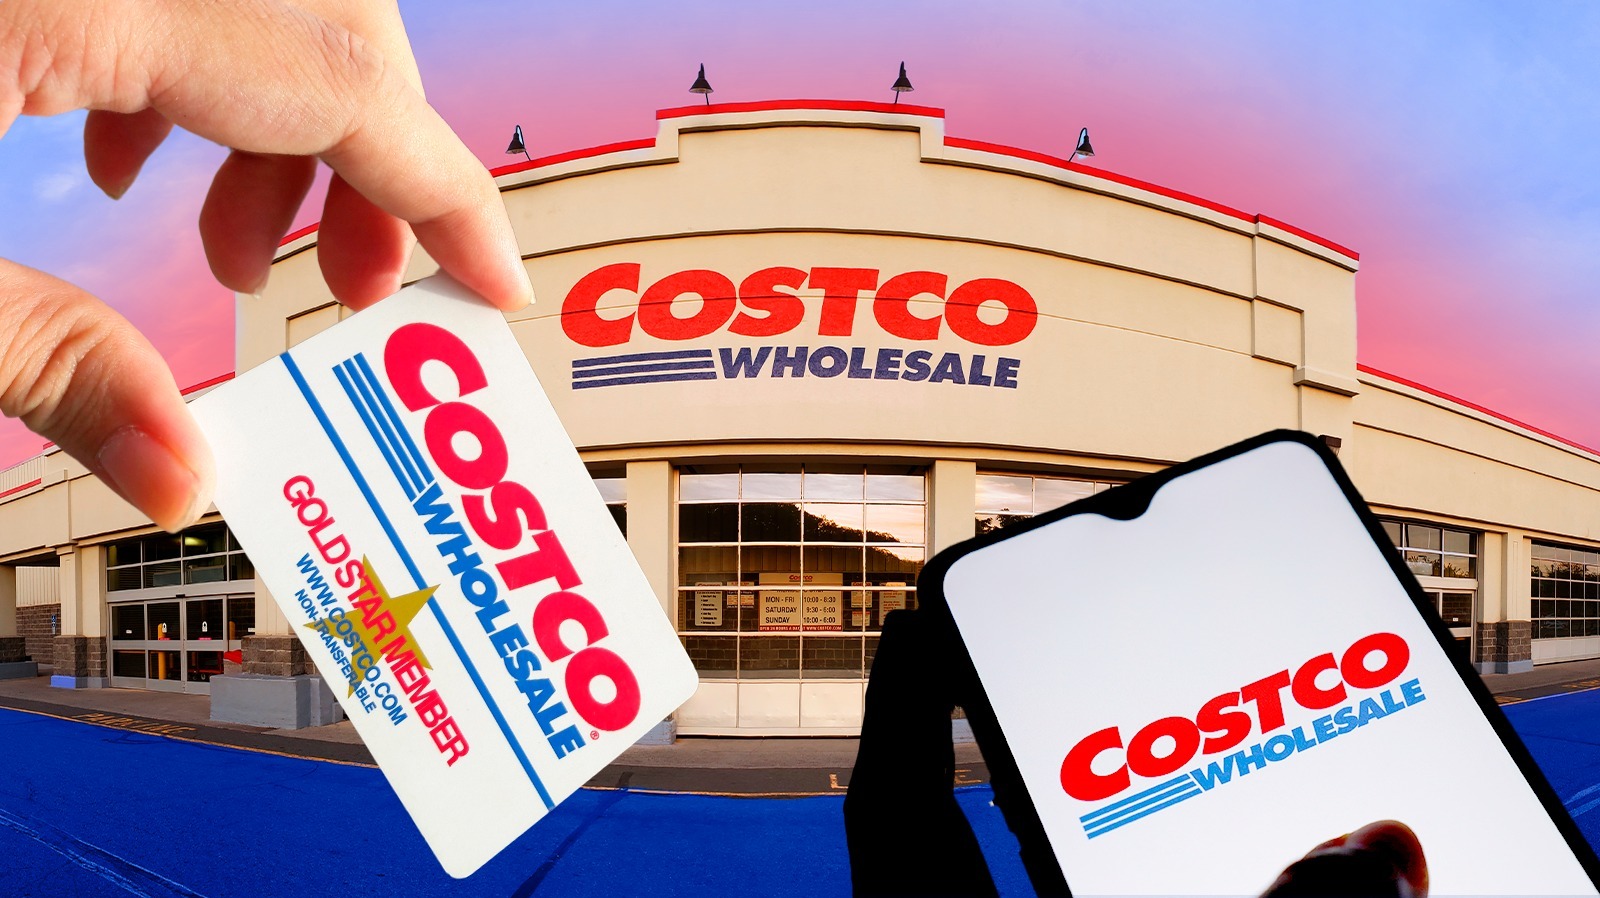 Kirkland Cookware Review: Costco's Hidden Gems? - Top 2024 Sets